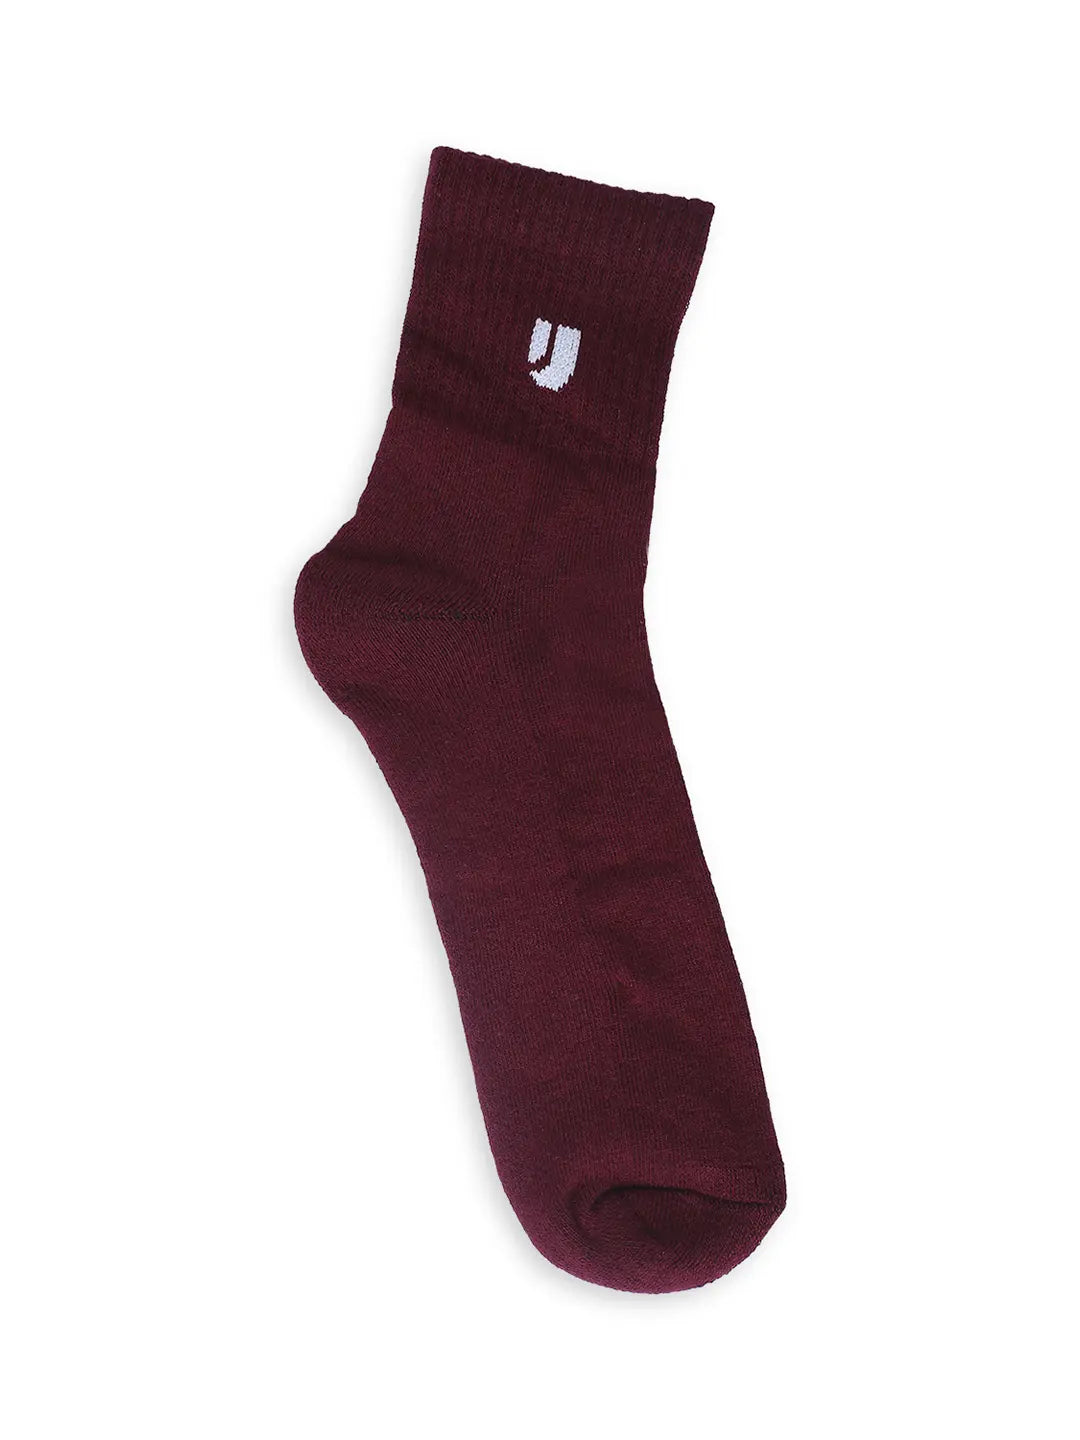 Men Navy & Maroon Cotton Blend Ankle Length Socks - Pack Of 2 - Underjeans by Spykar